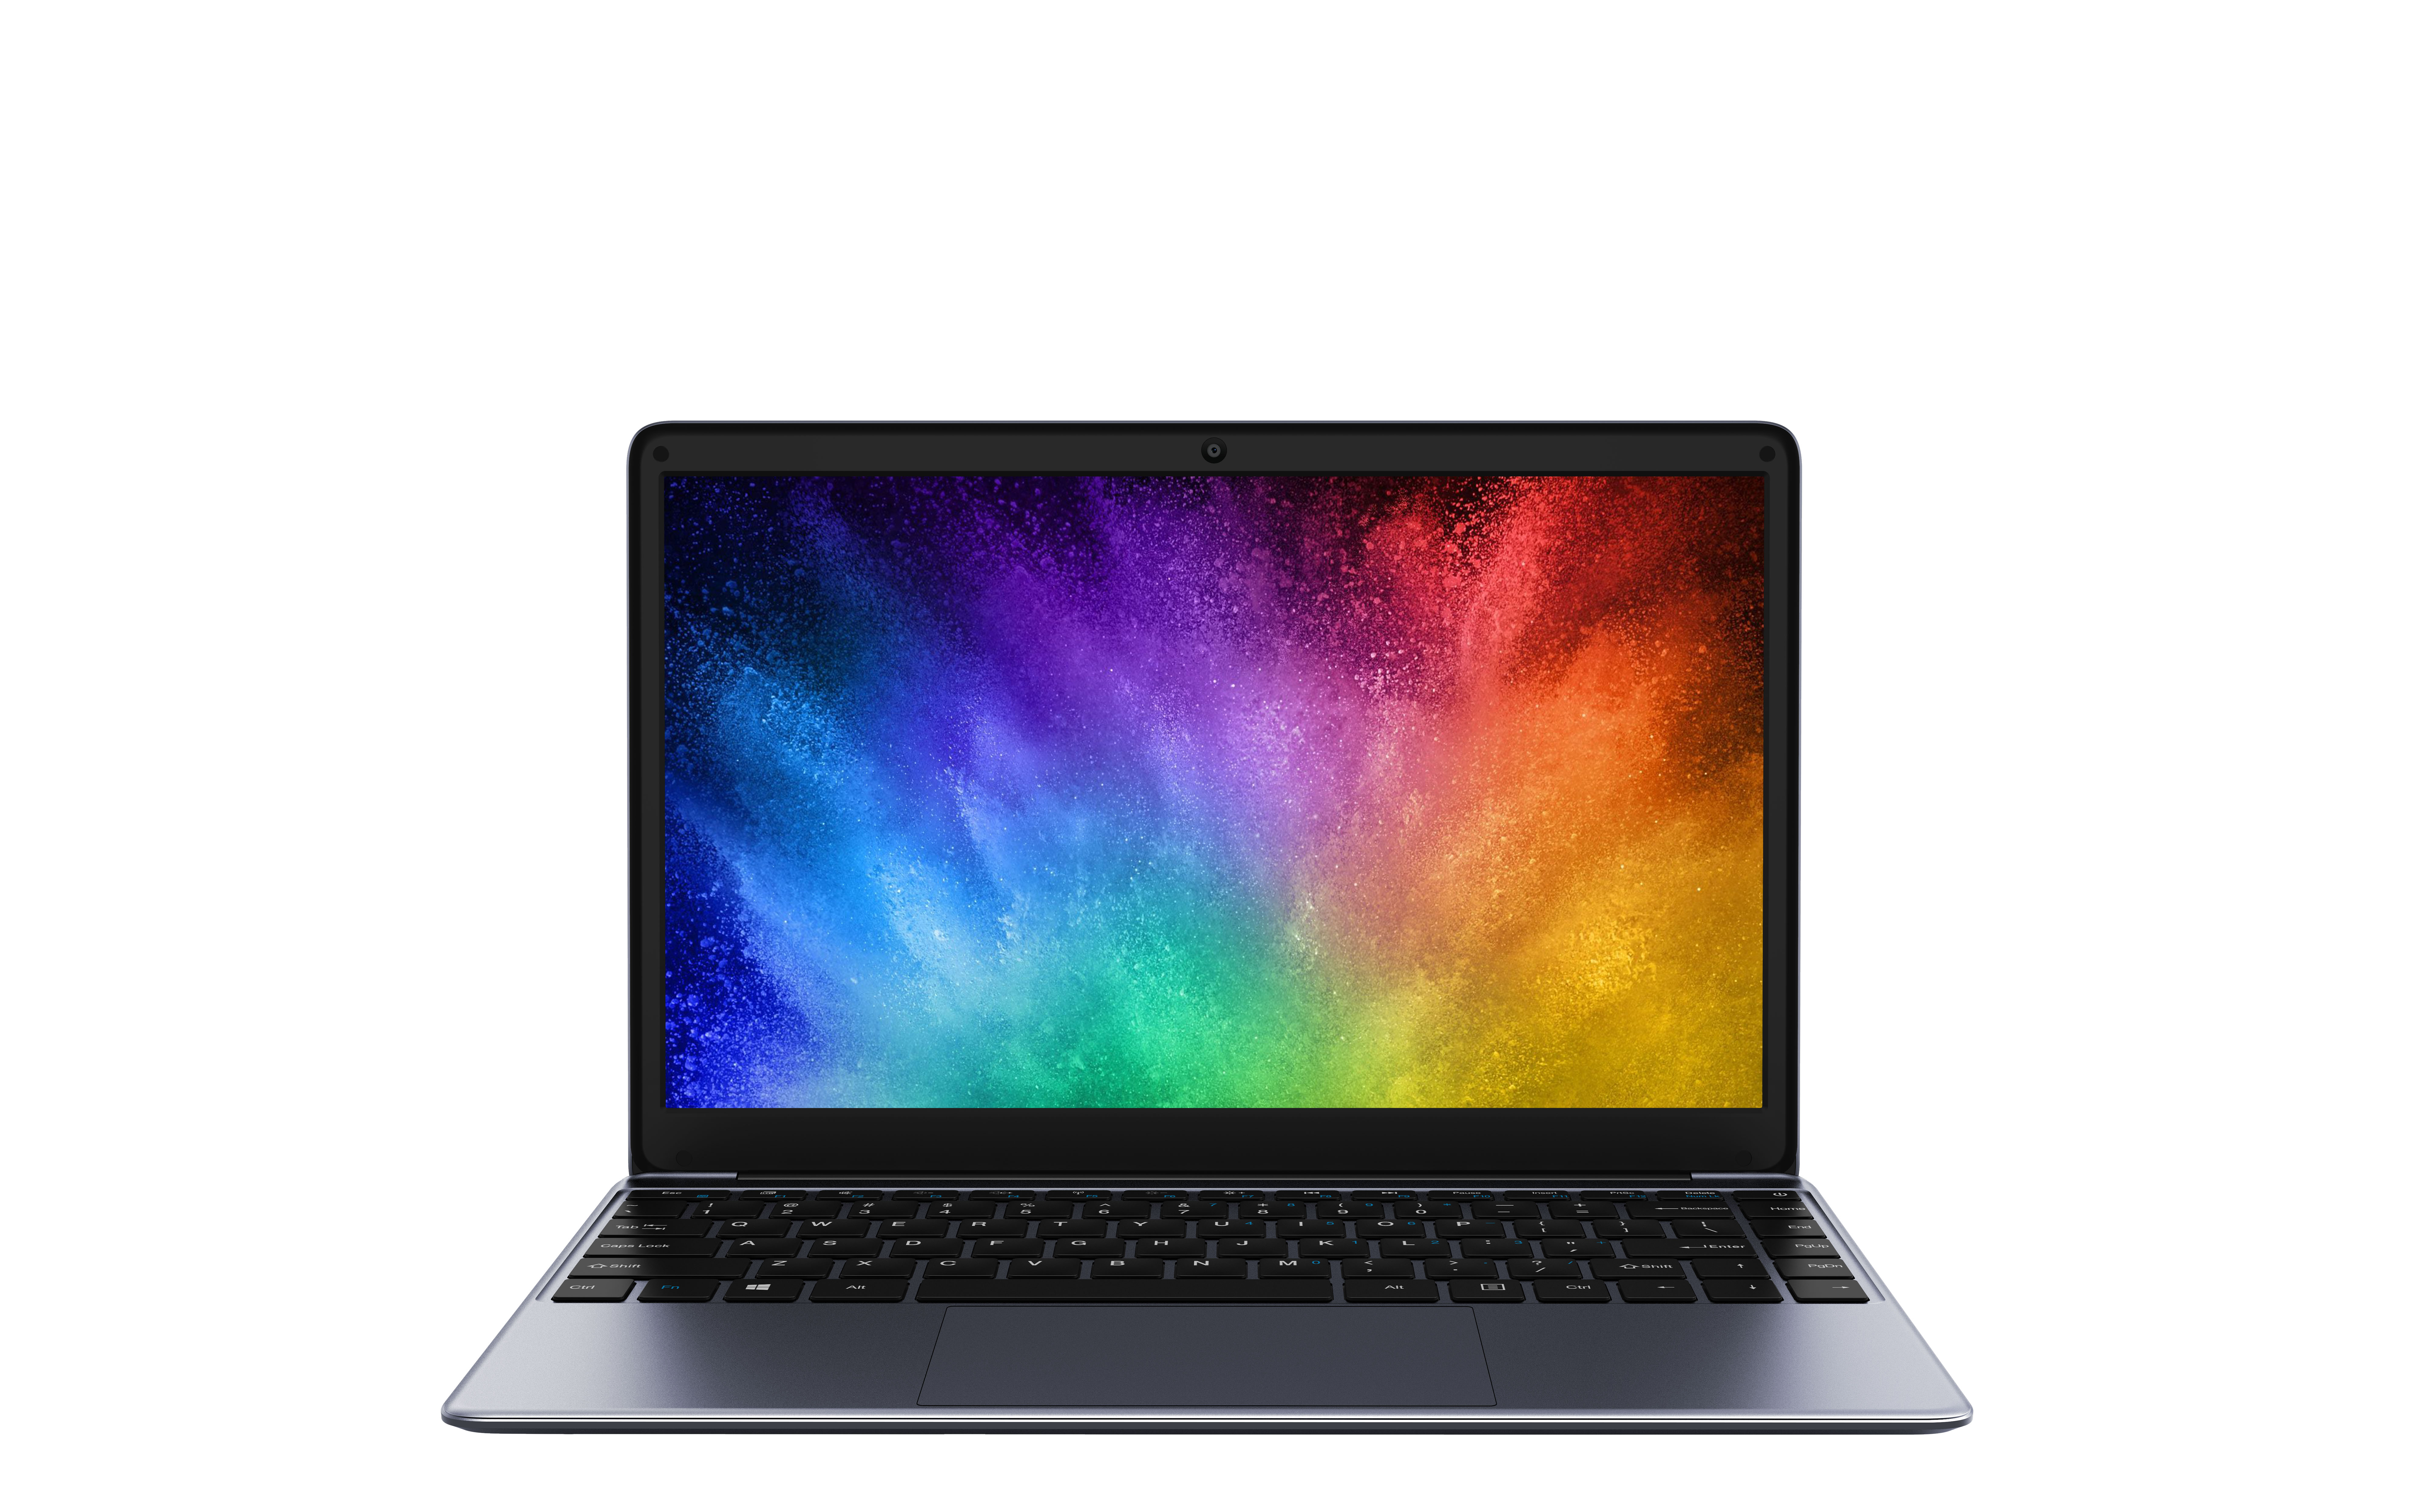 

CHUWI HeroBook Pro 14.1 inch Intel Gemini lake N4000 Intel UHD Graphics 600 8GB LPDDR4 RAM 256GB SSD Notebook